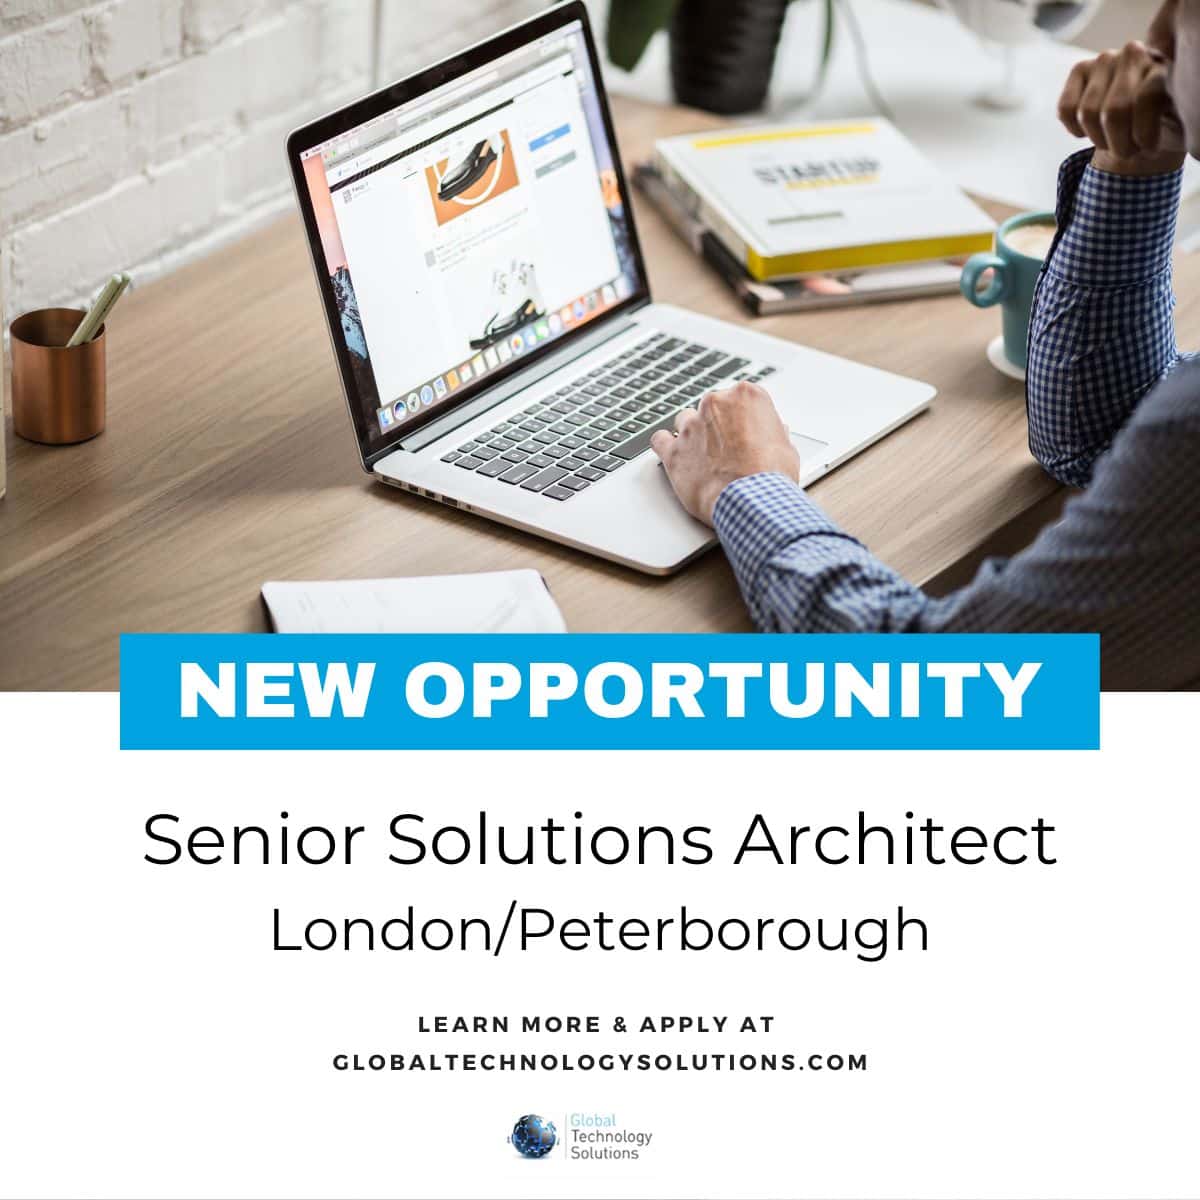 Senior Solutions Architect GTS job